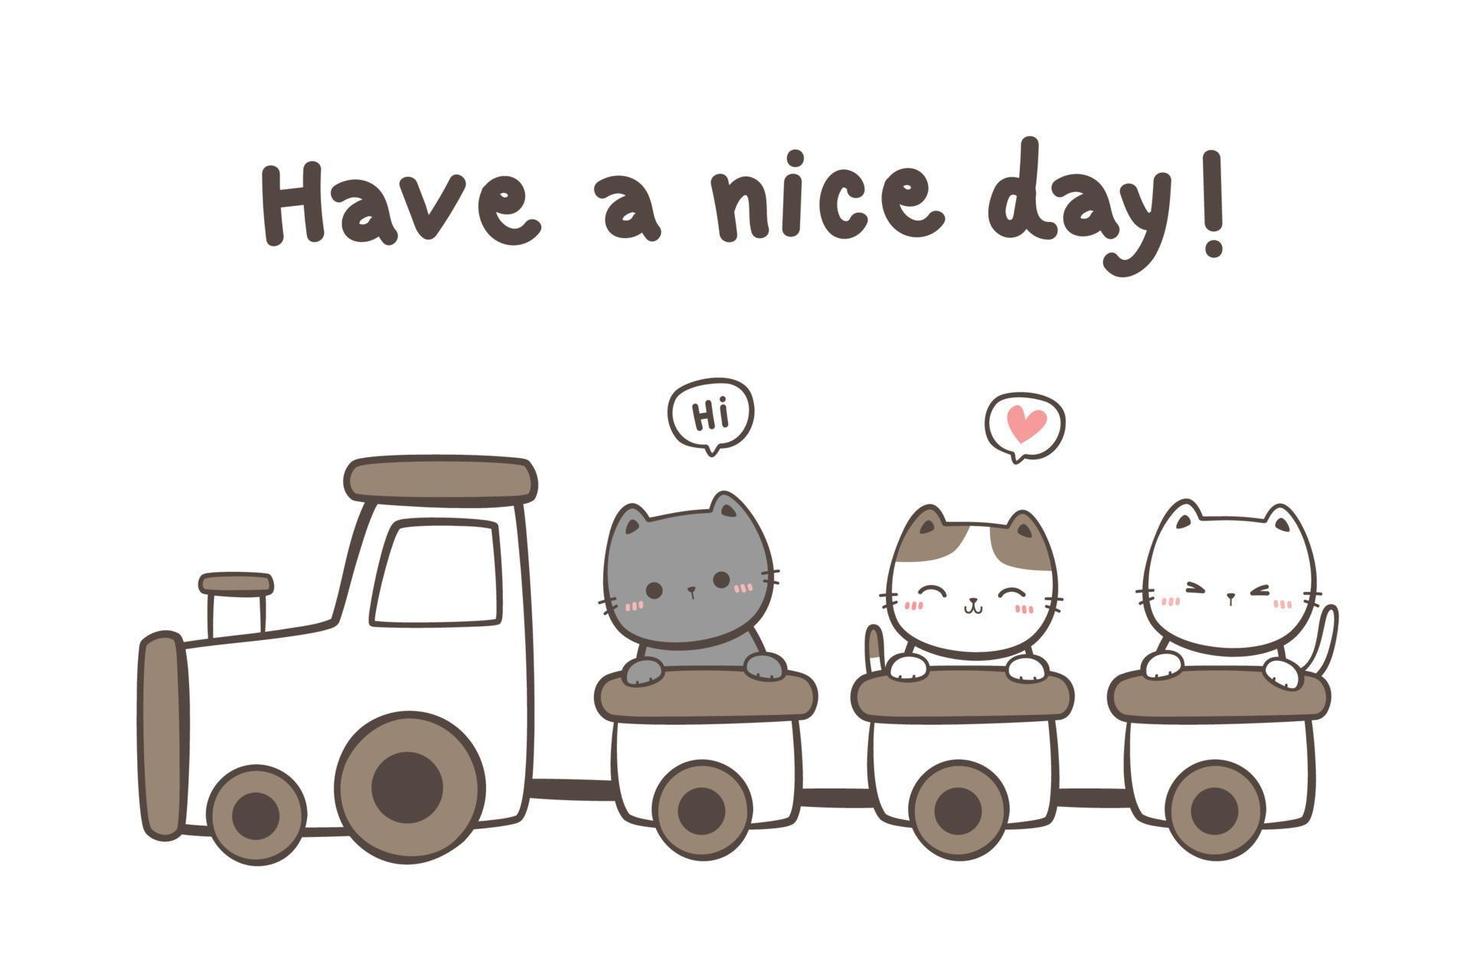 kitty cat riding a train cartoon doodle illustration vector